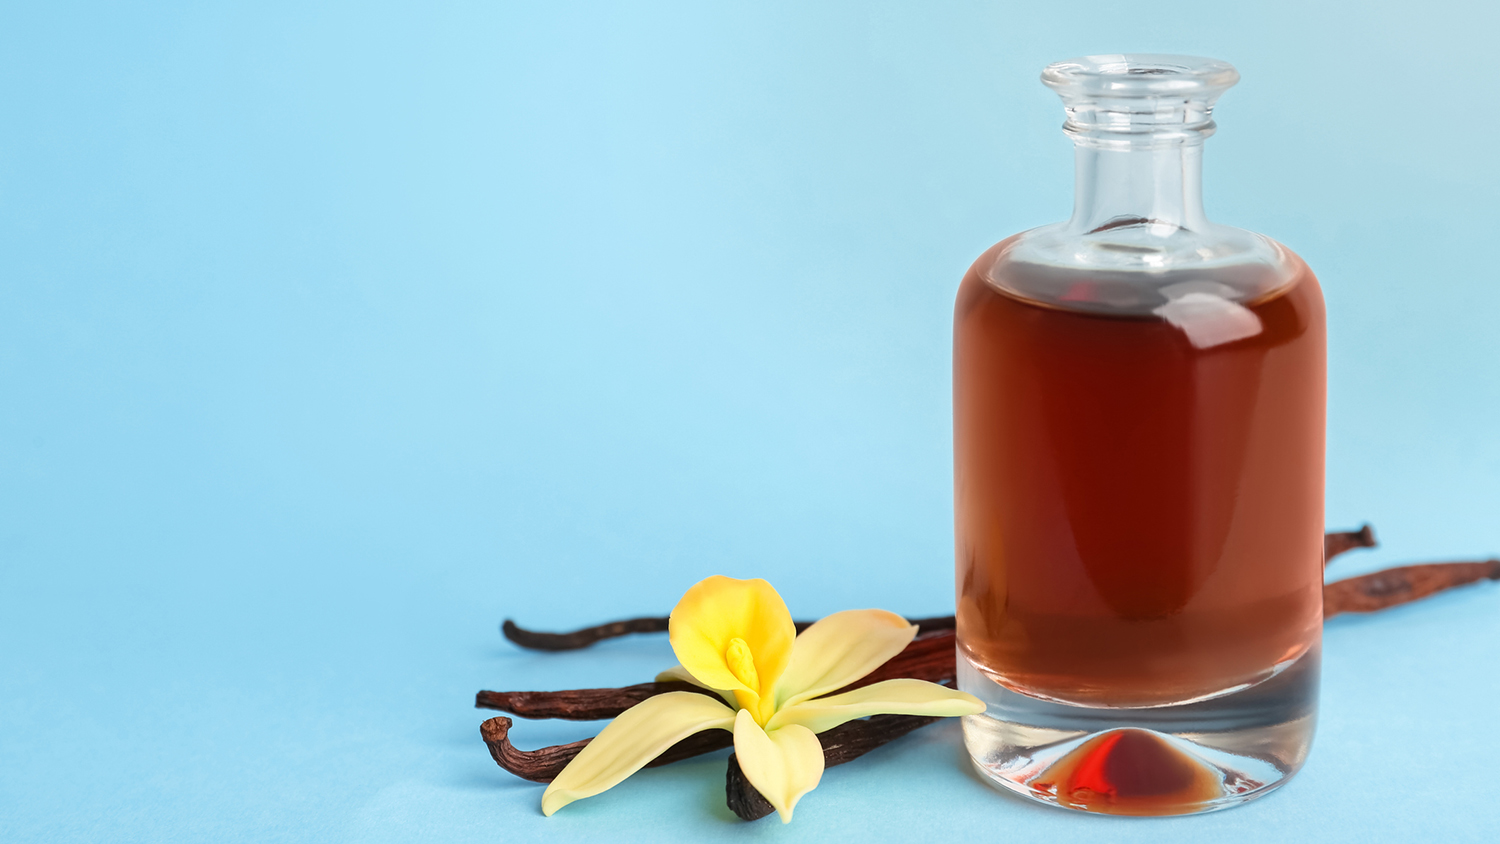 Best Vanilla Essential Oil AU. Buy Pure Vanilla Oil For Diffuser, Perfume  DIY